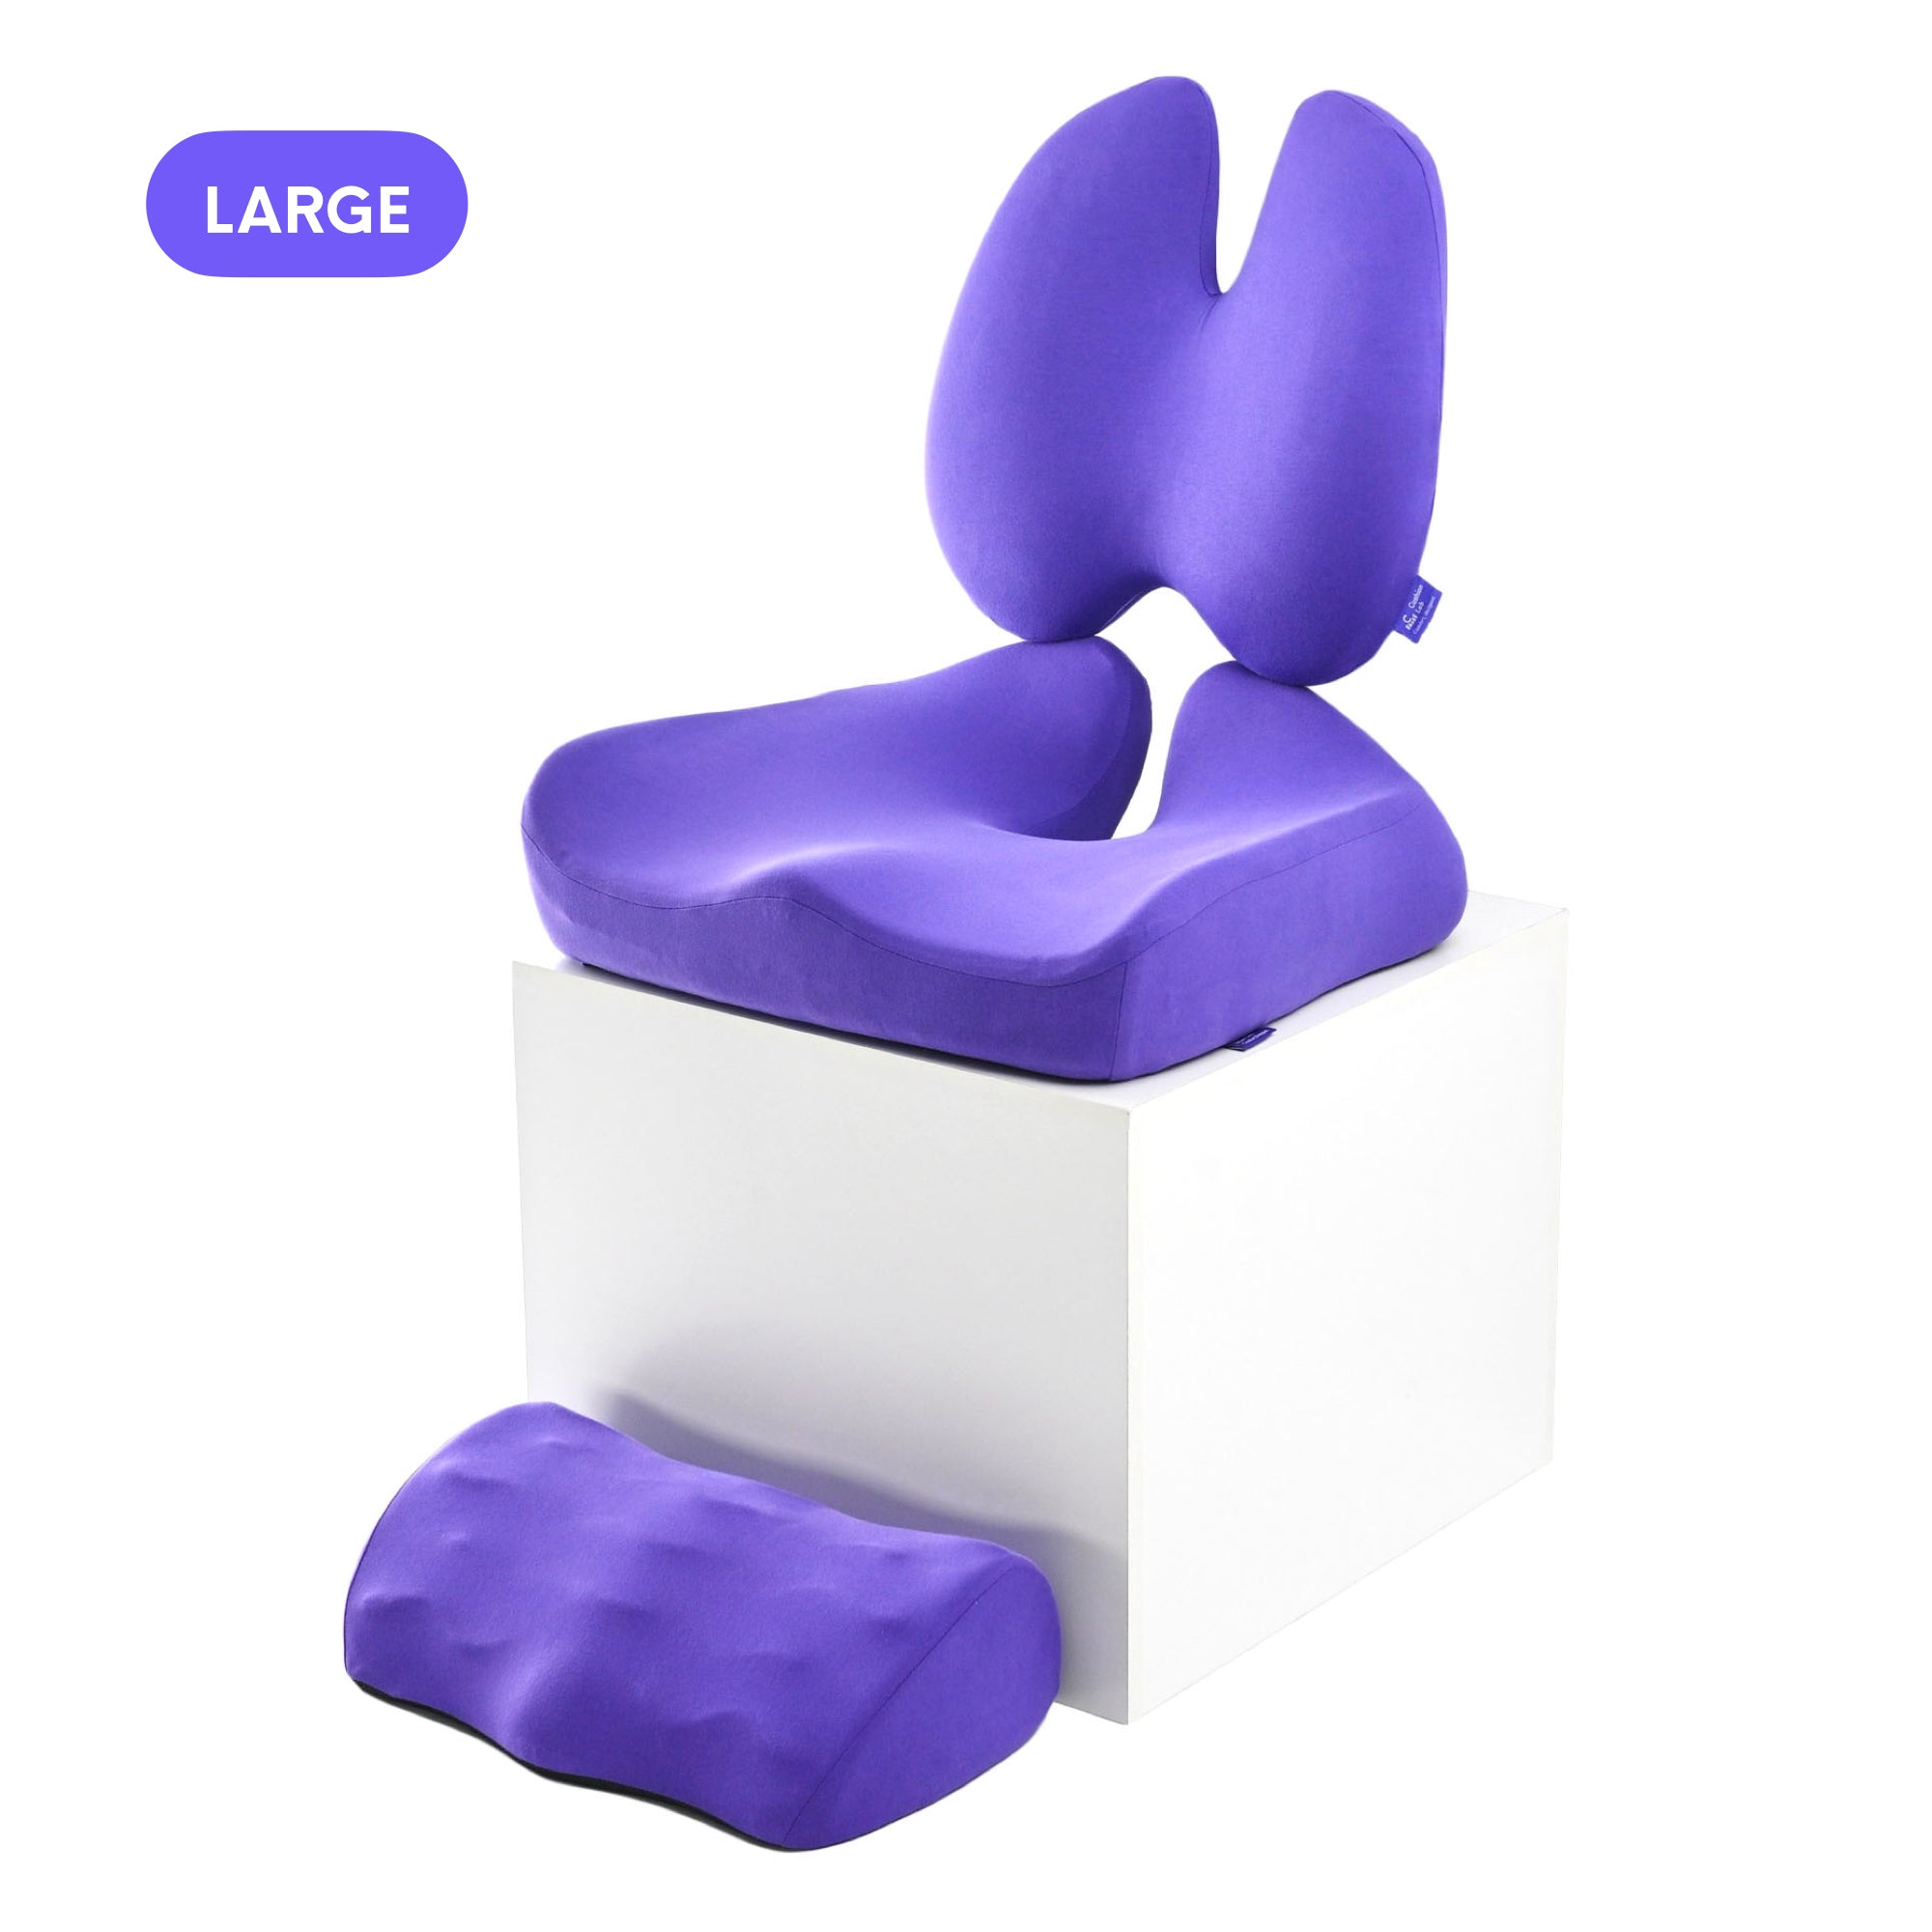 Cushion Lab Pressure Relief Seat Cushion - Purple - Standard